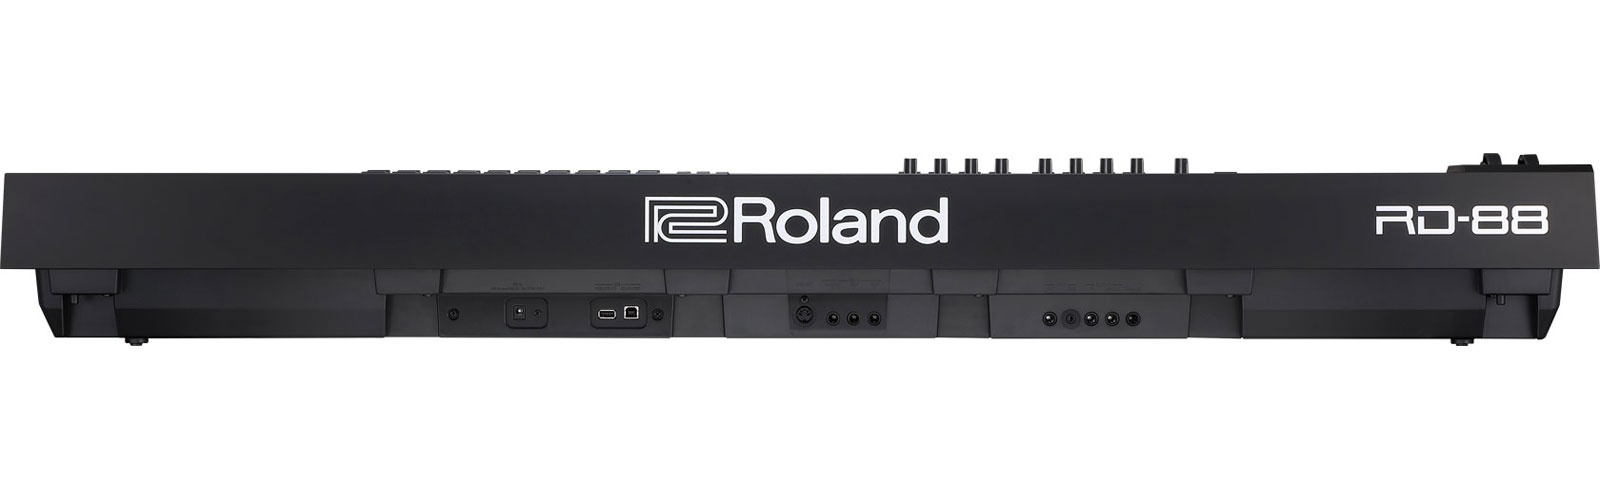 Roland Rd-88 - Stage keyboard - Variation 5